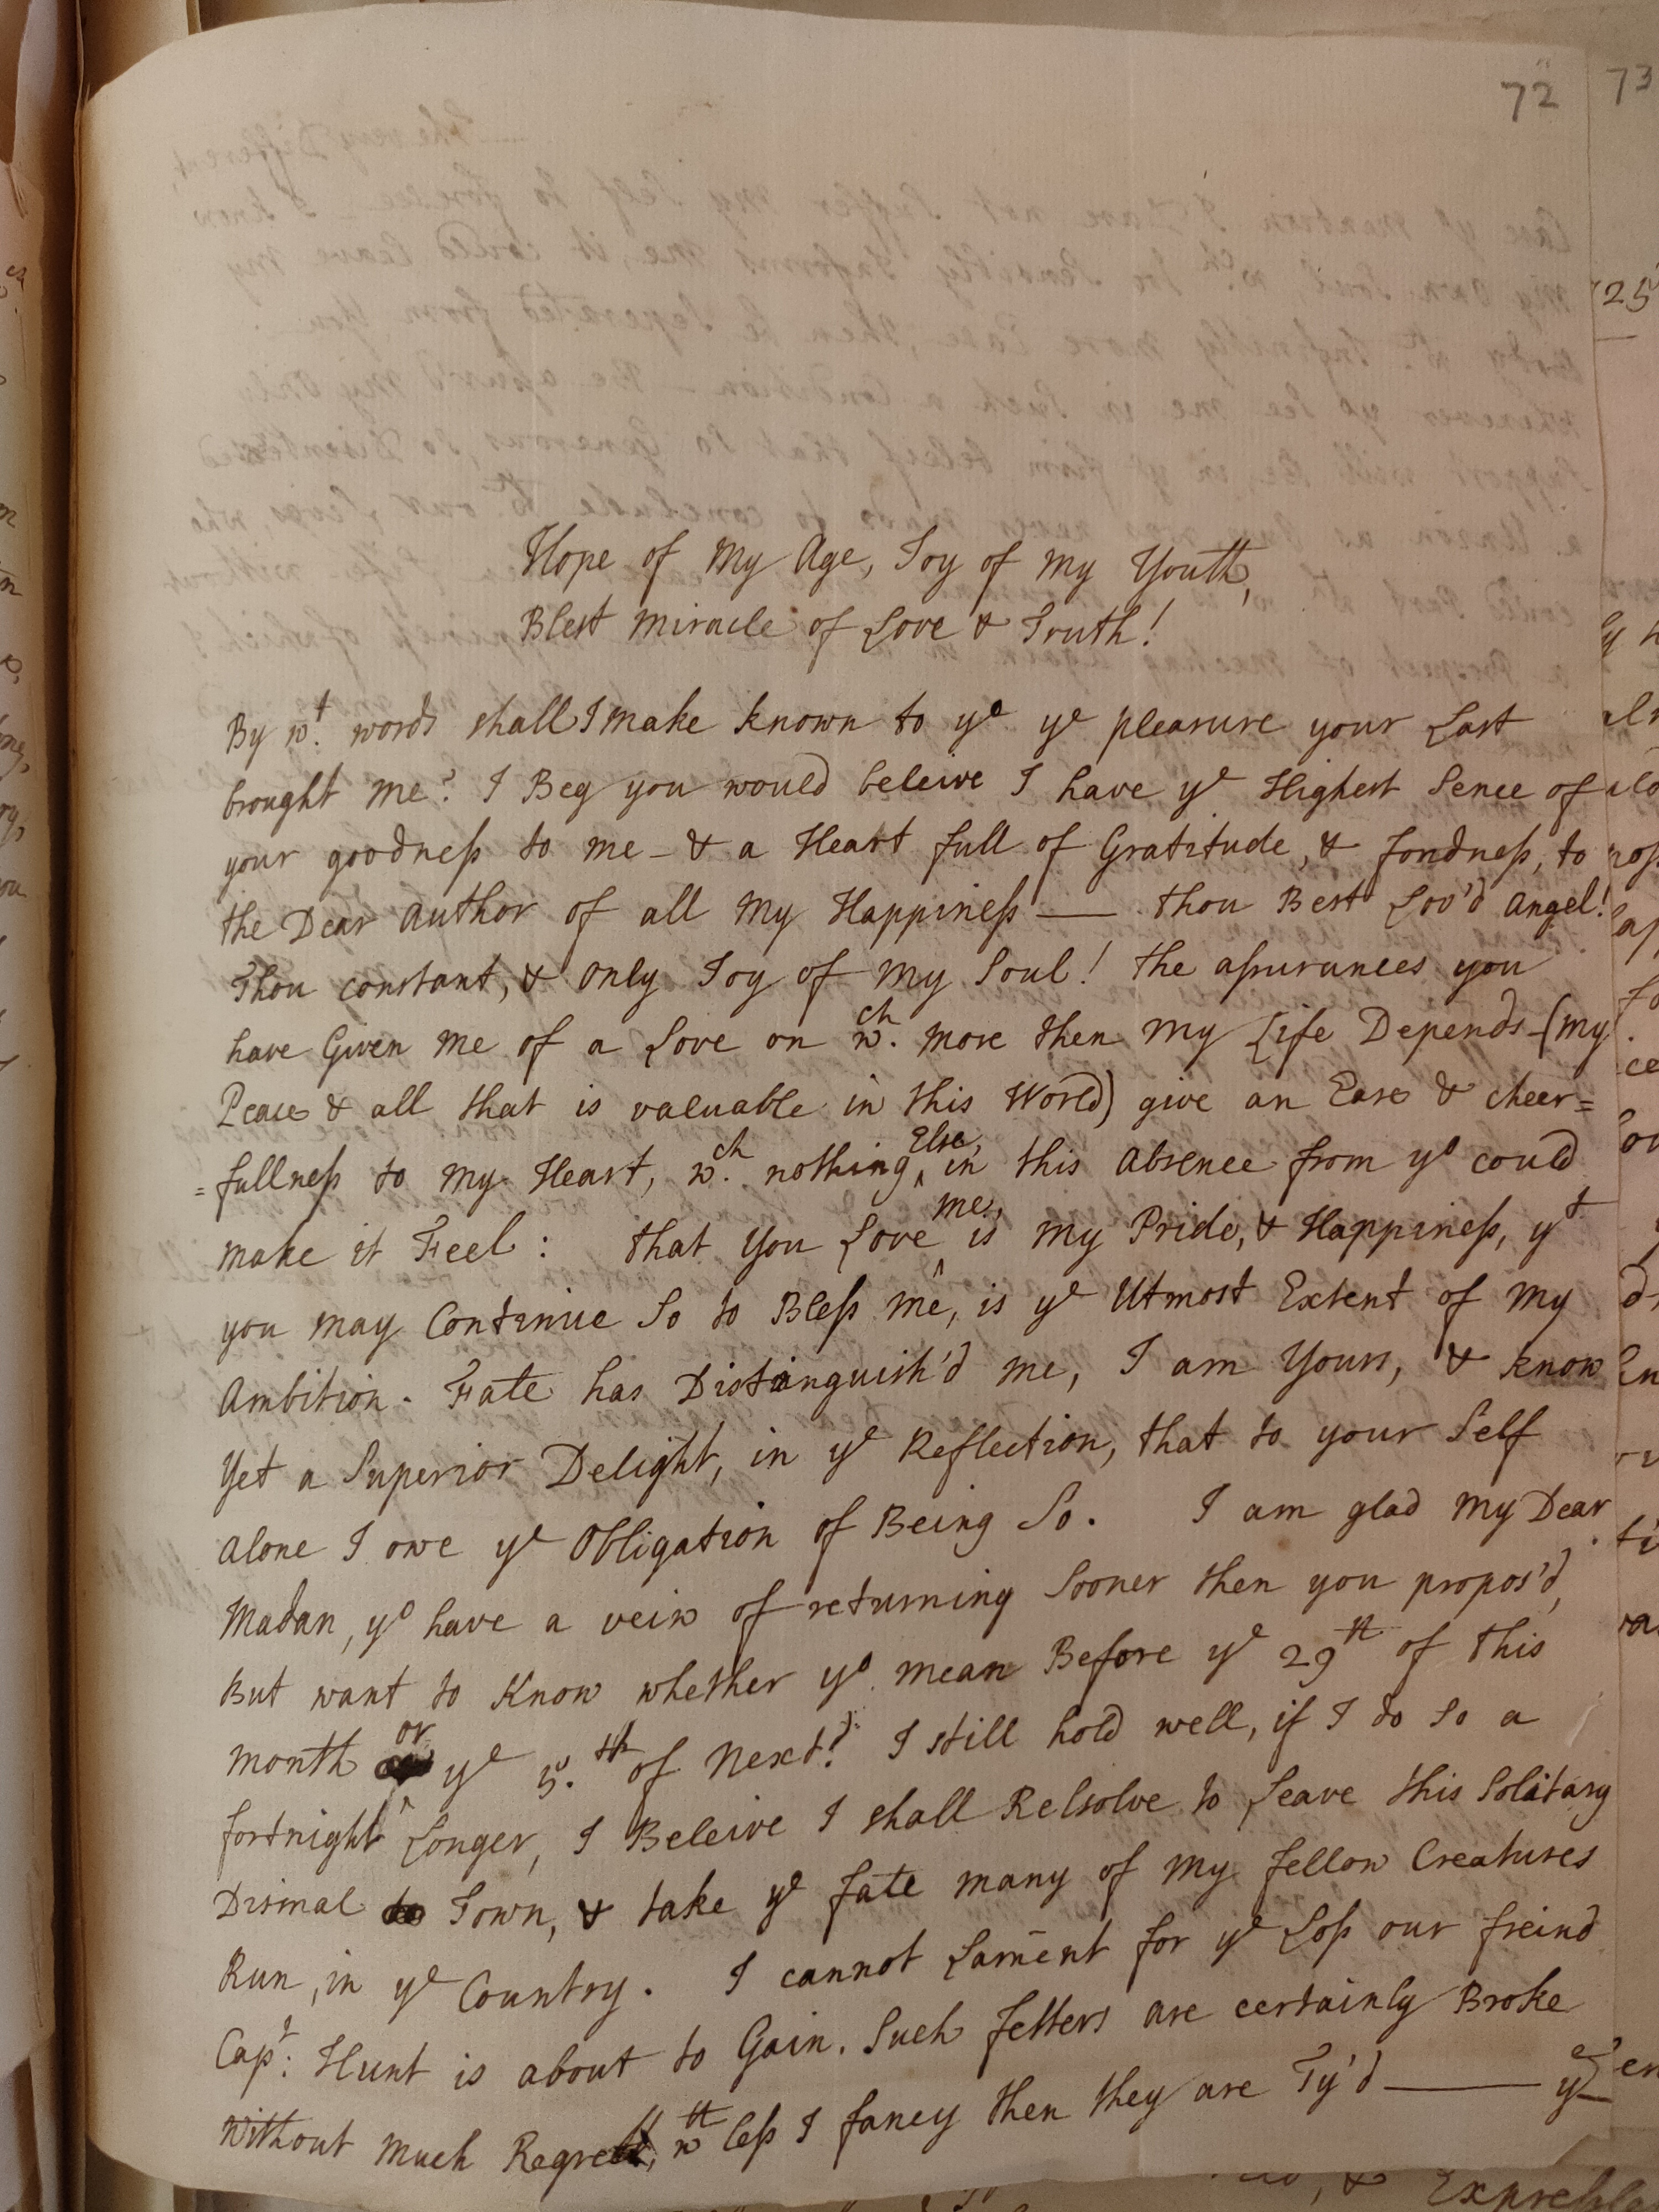 Image #1 of letter: Judith Madan to Martin Madan, 24 July 1725